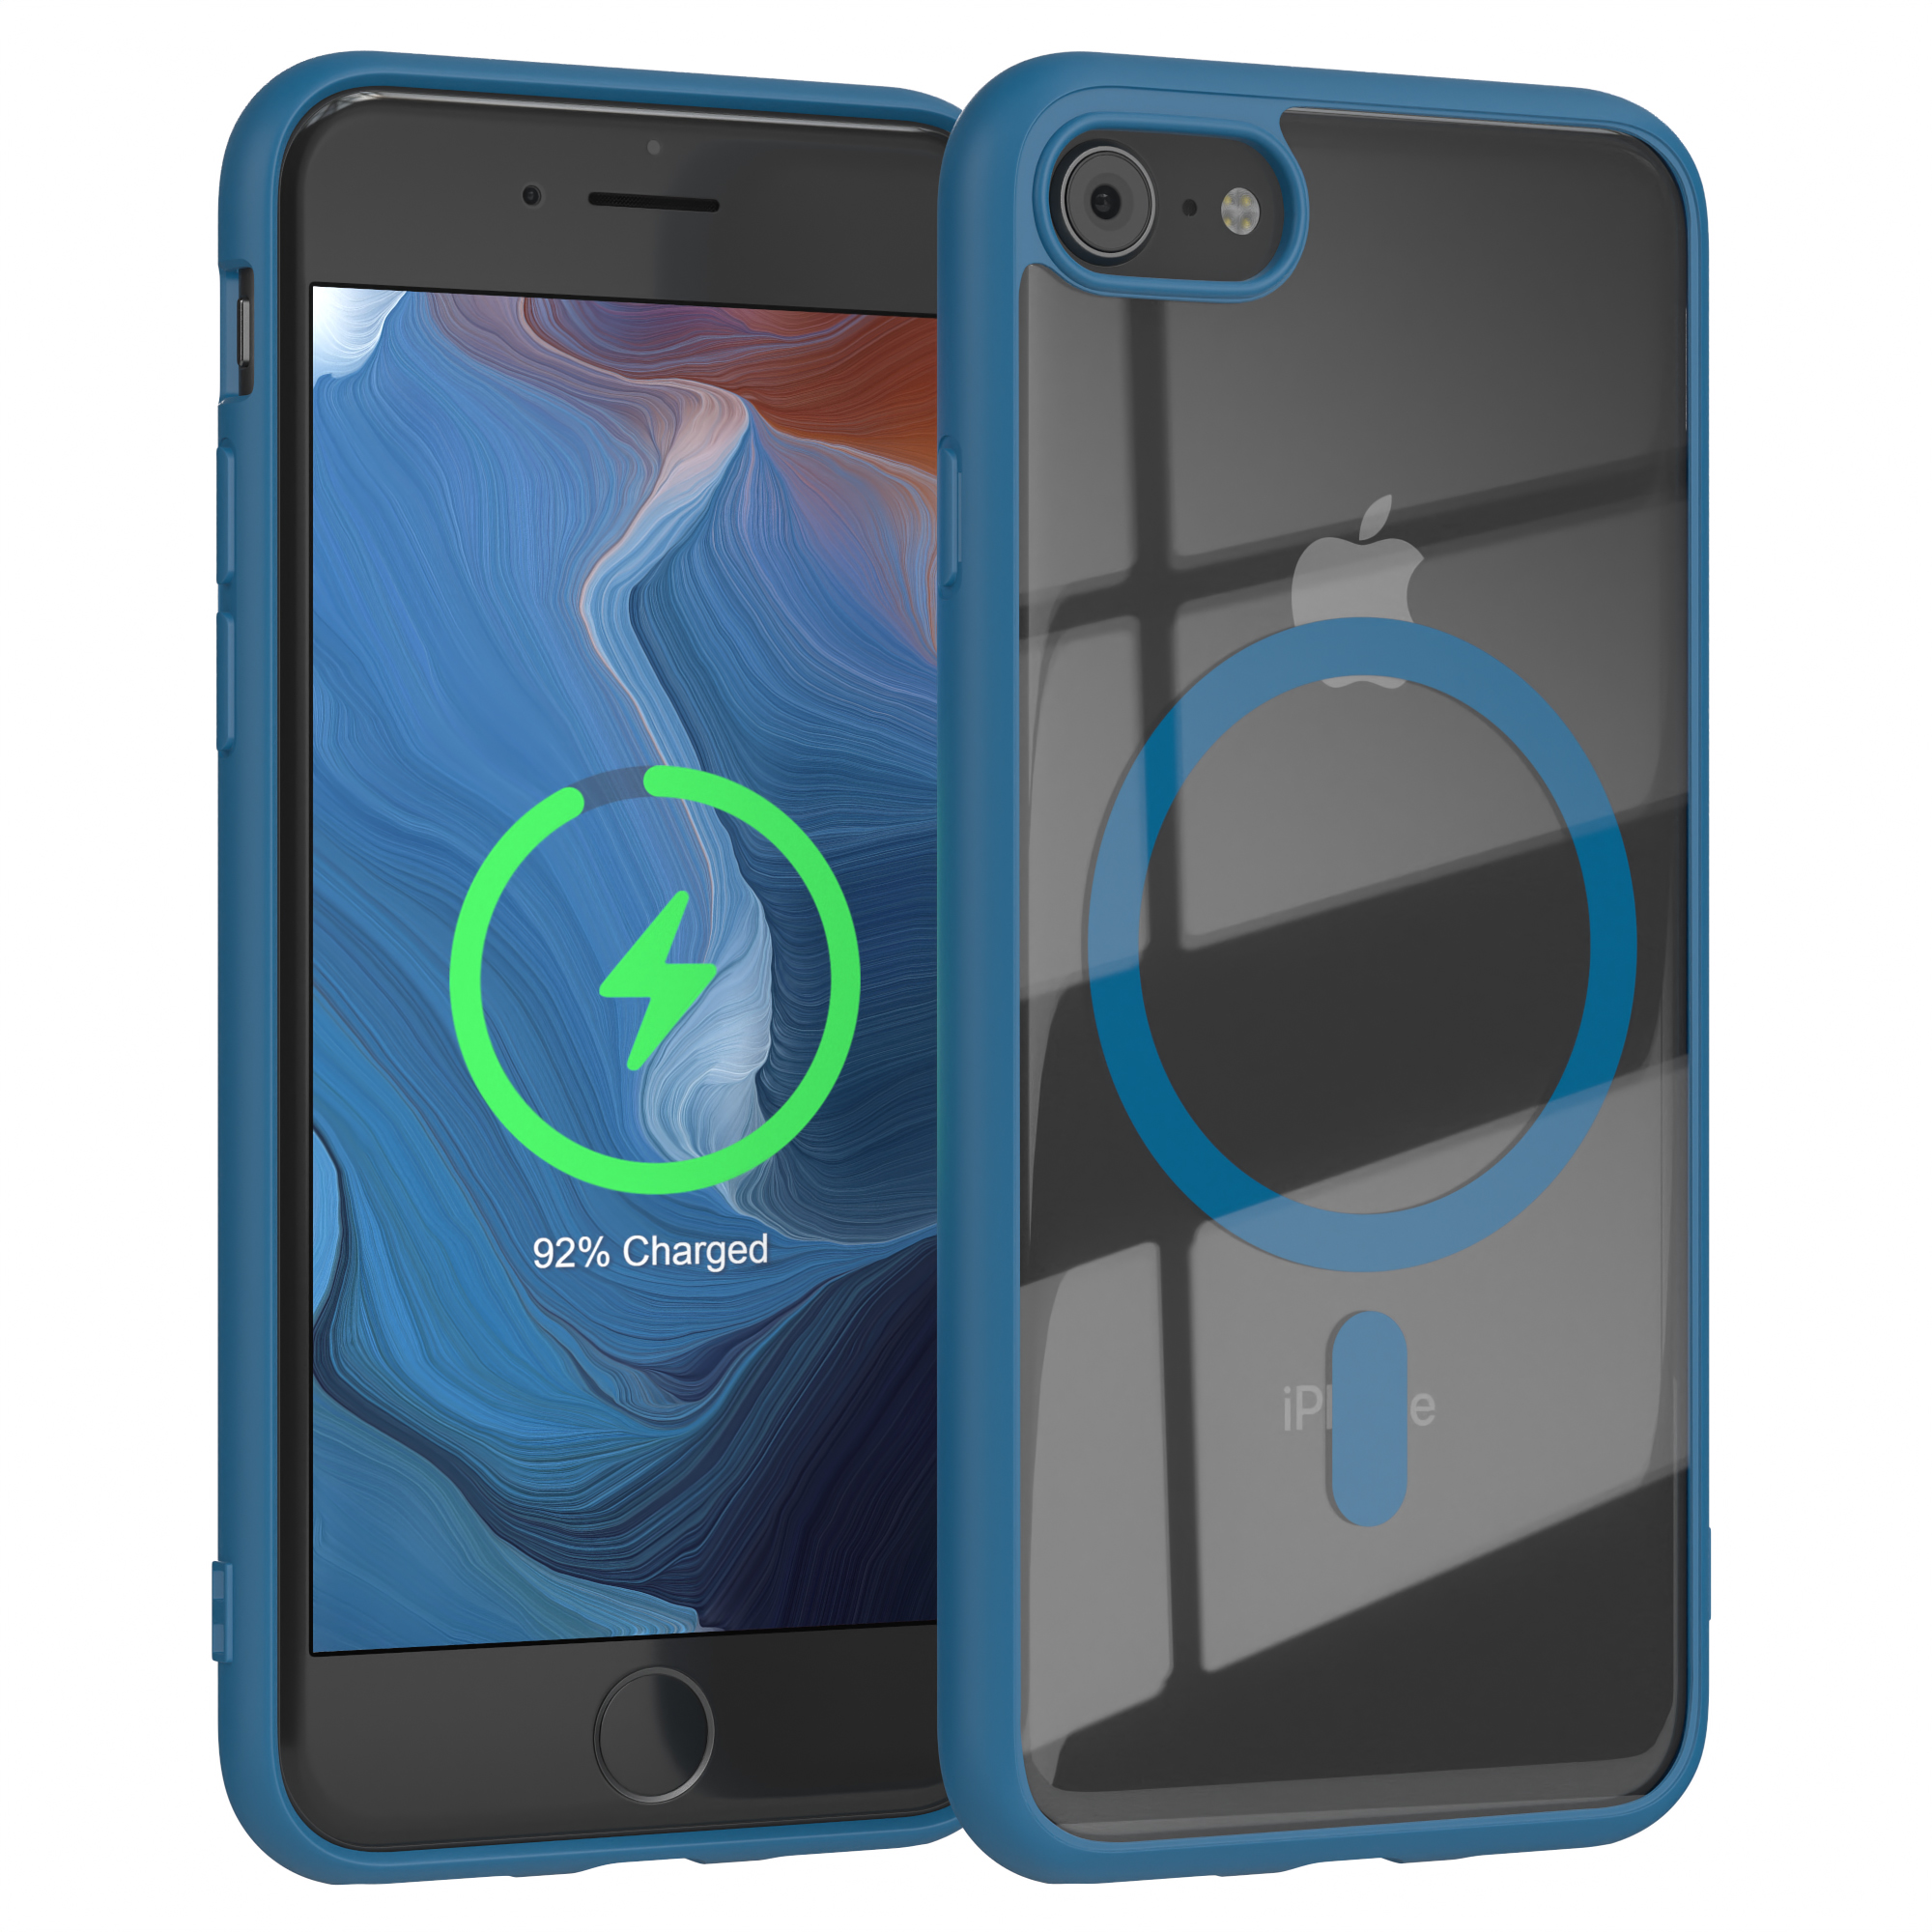 EAZY CASE Dunkelblau Apple, 8, iPhone mit 2022 SE MagSafe, 2020, SE / / Clear iPhone Cover 7 Bumper